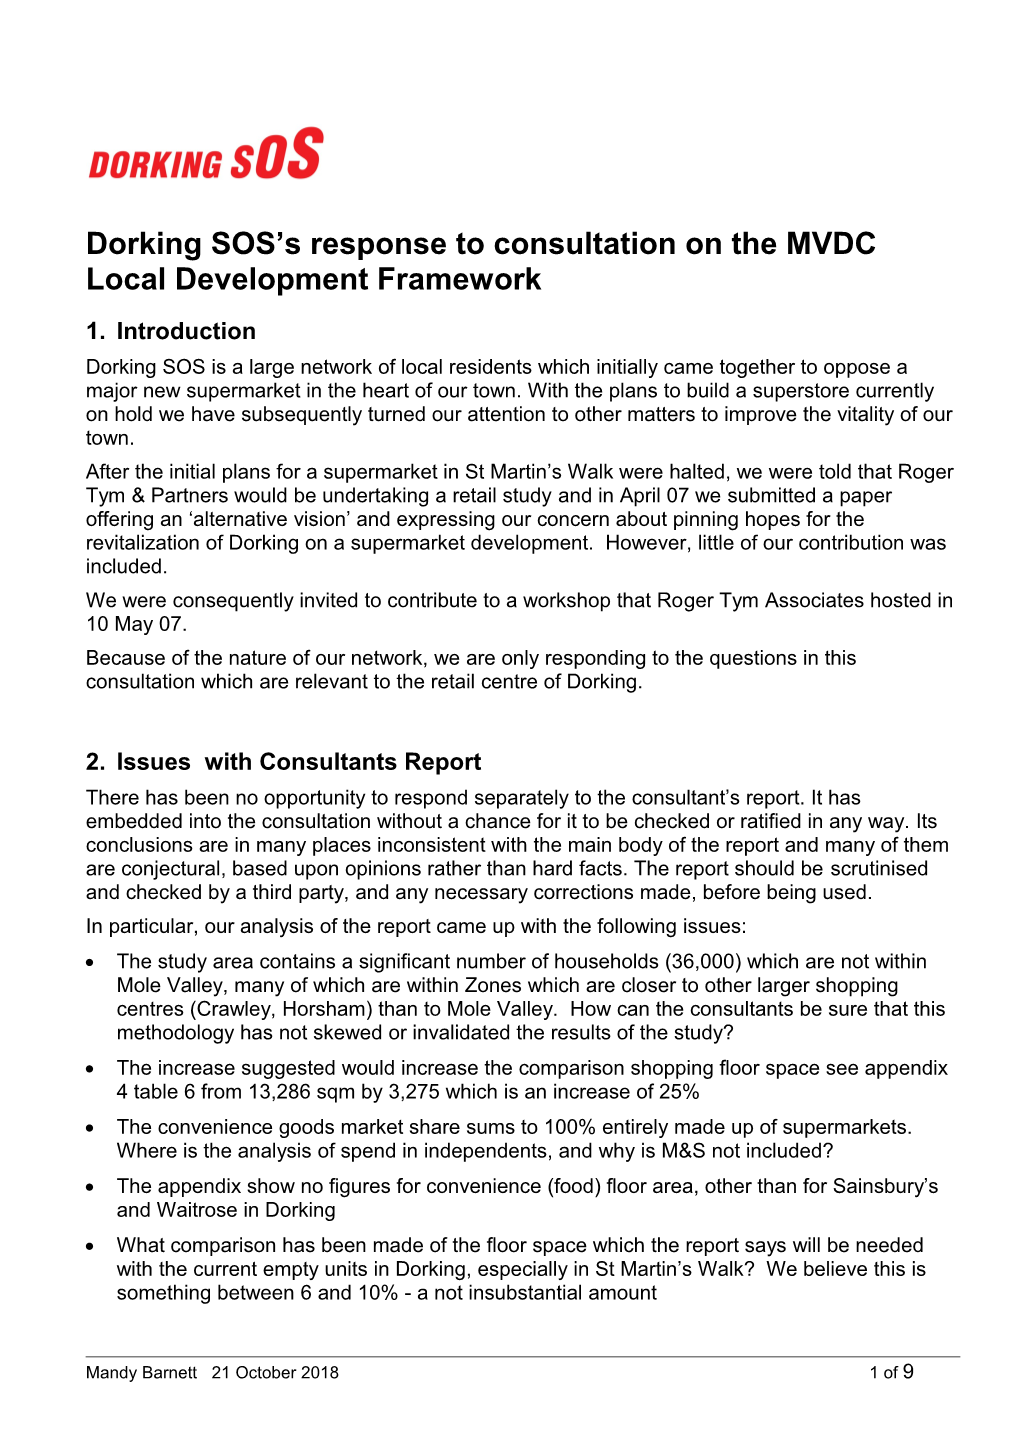 Dorking SOS S Response to Consultation on the MVDC Local Development Framework